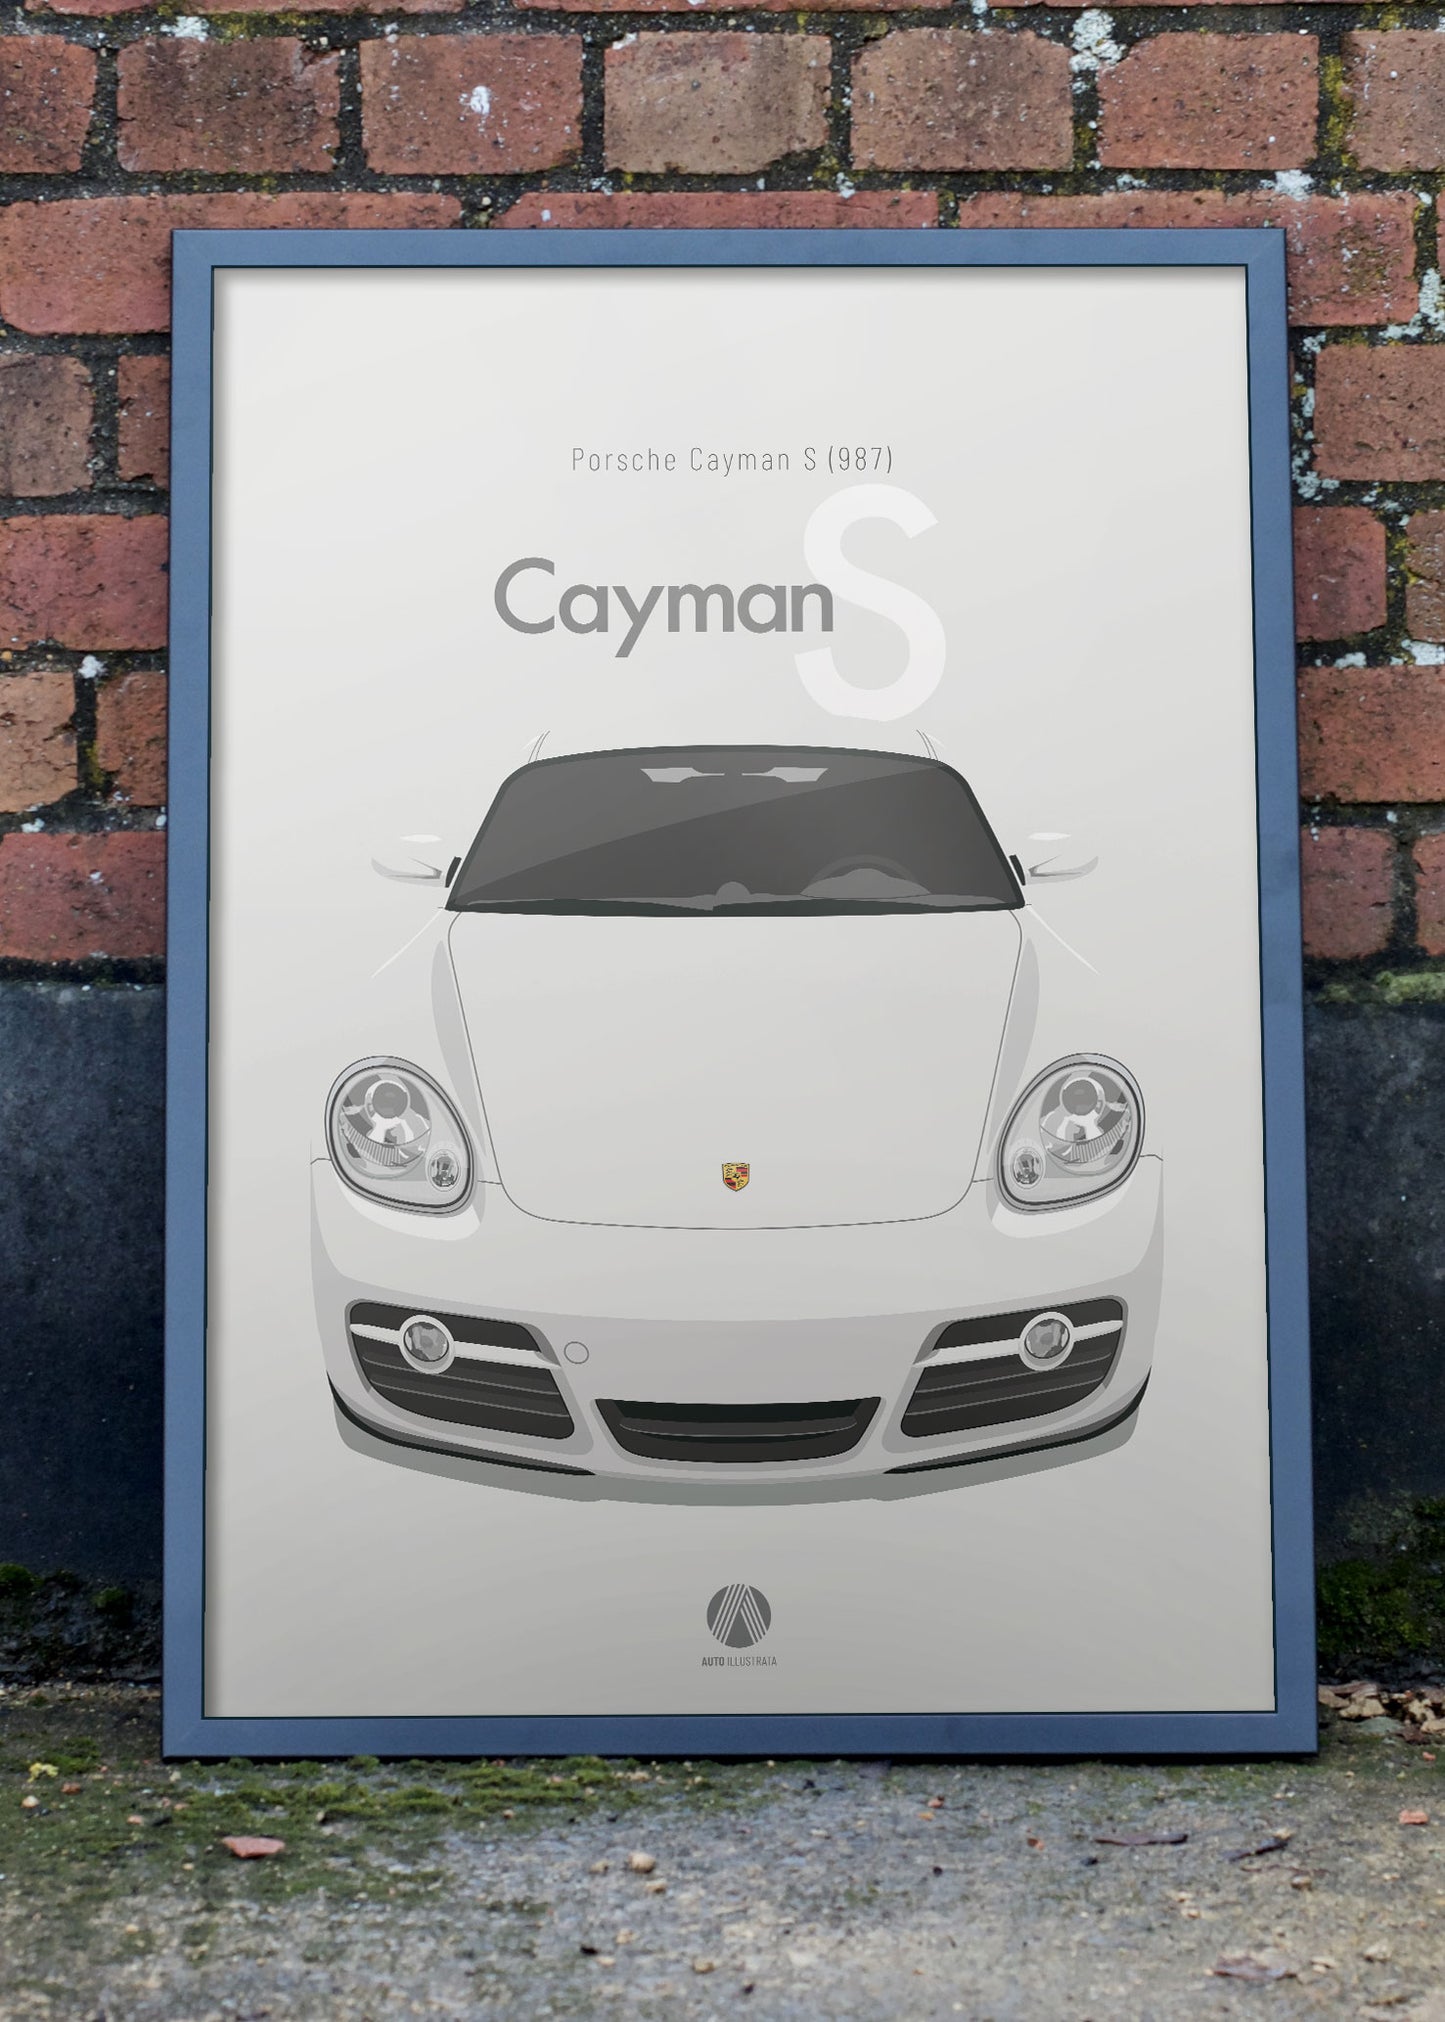 2005 Porsche Cayman S (987) Carrara White - poster print